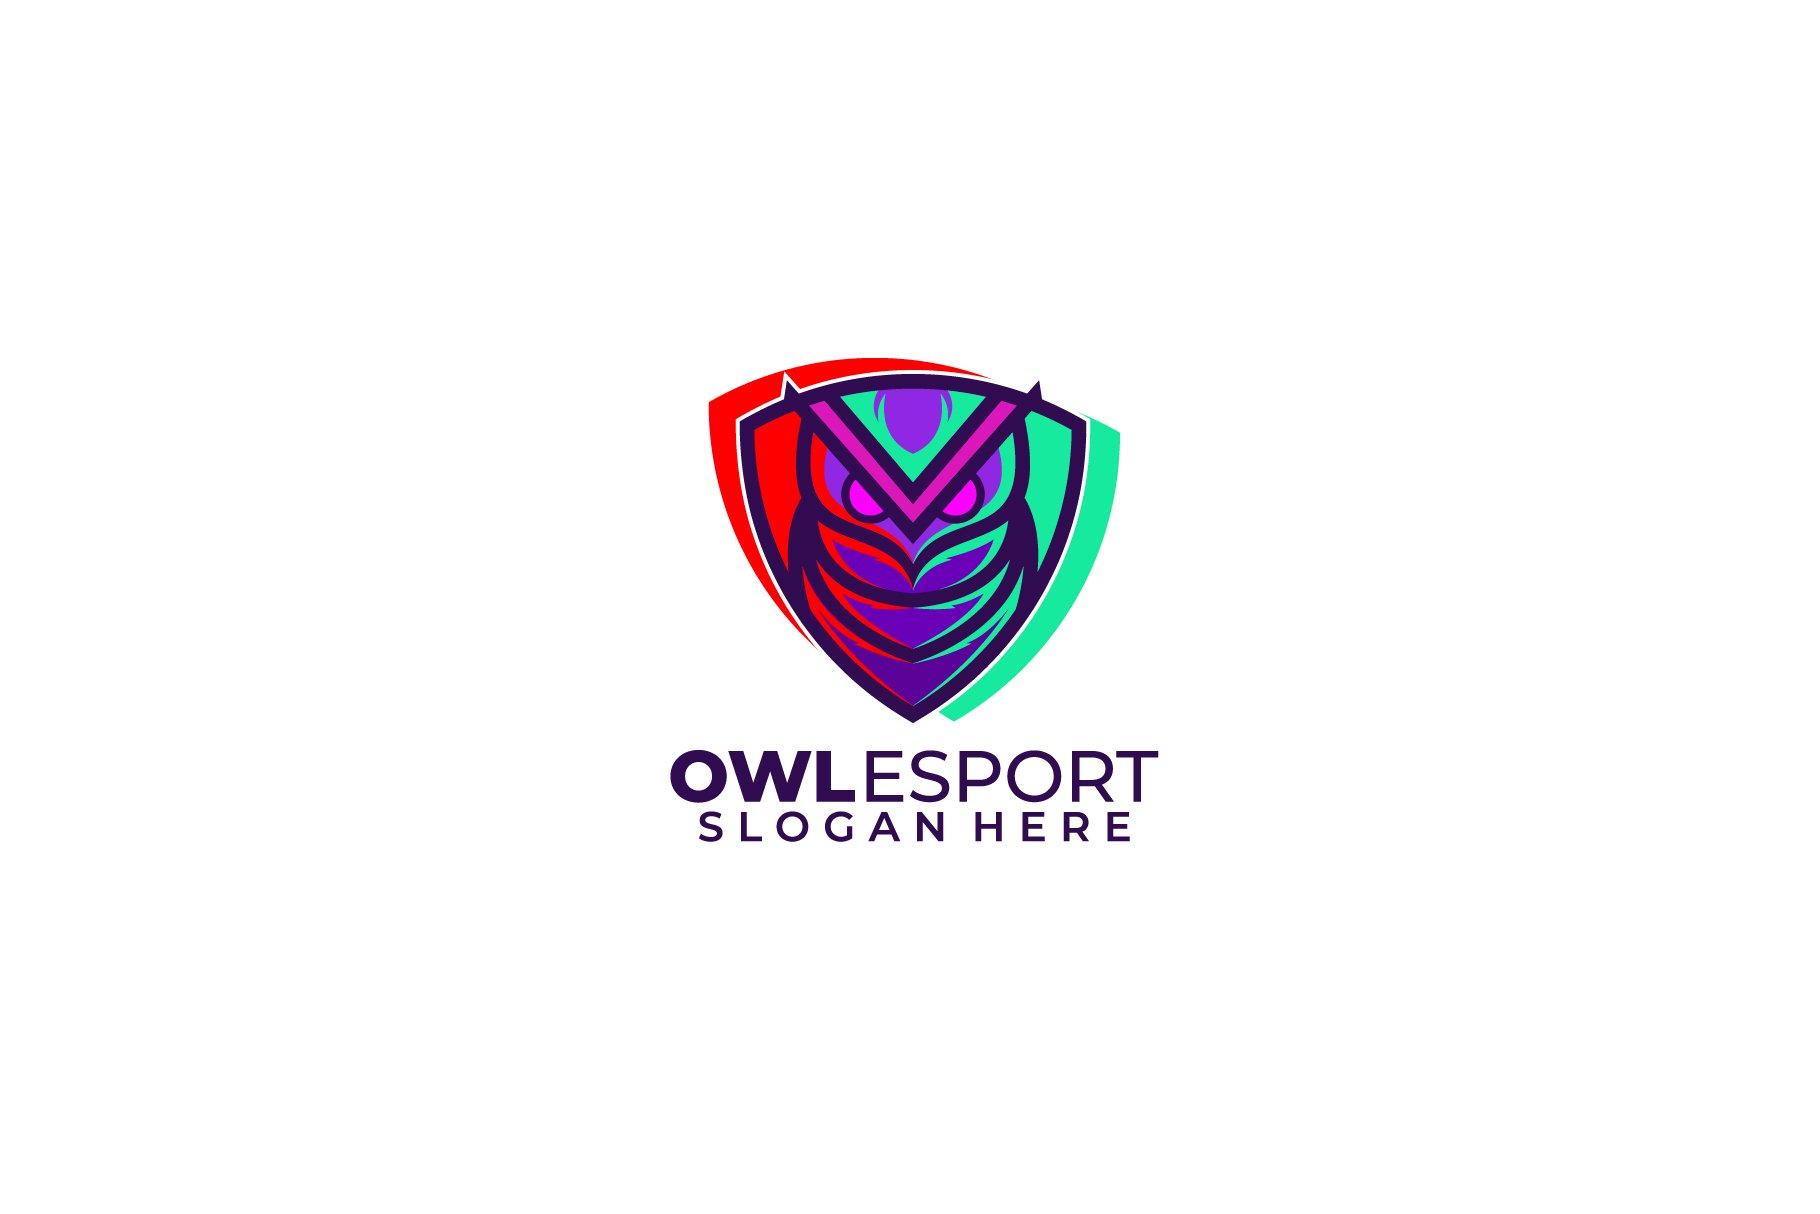 owl esports logo symbol elegant cover image.